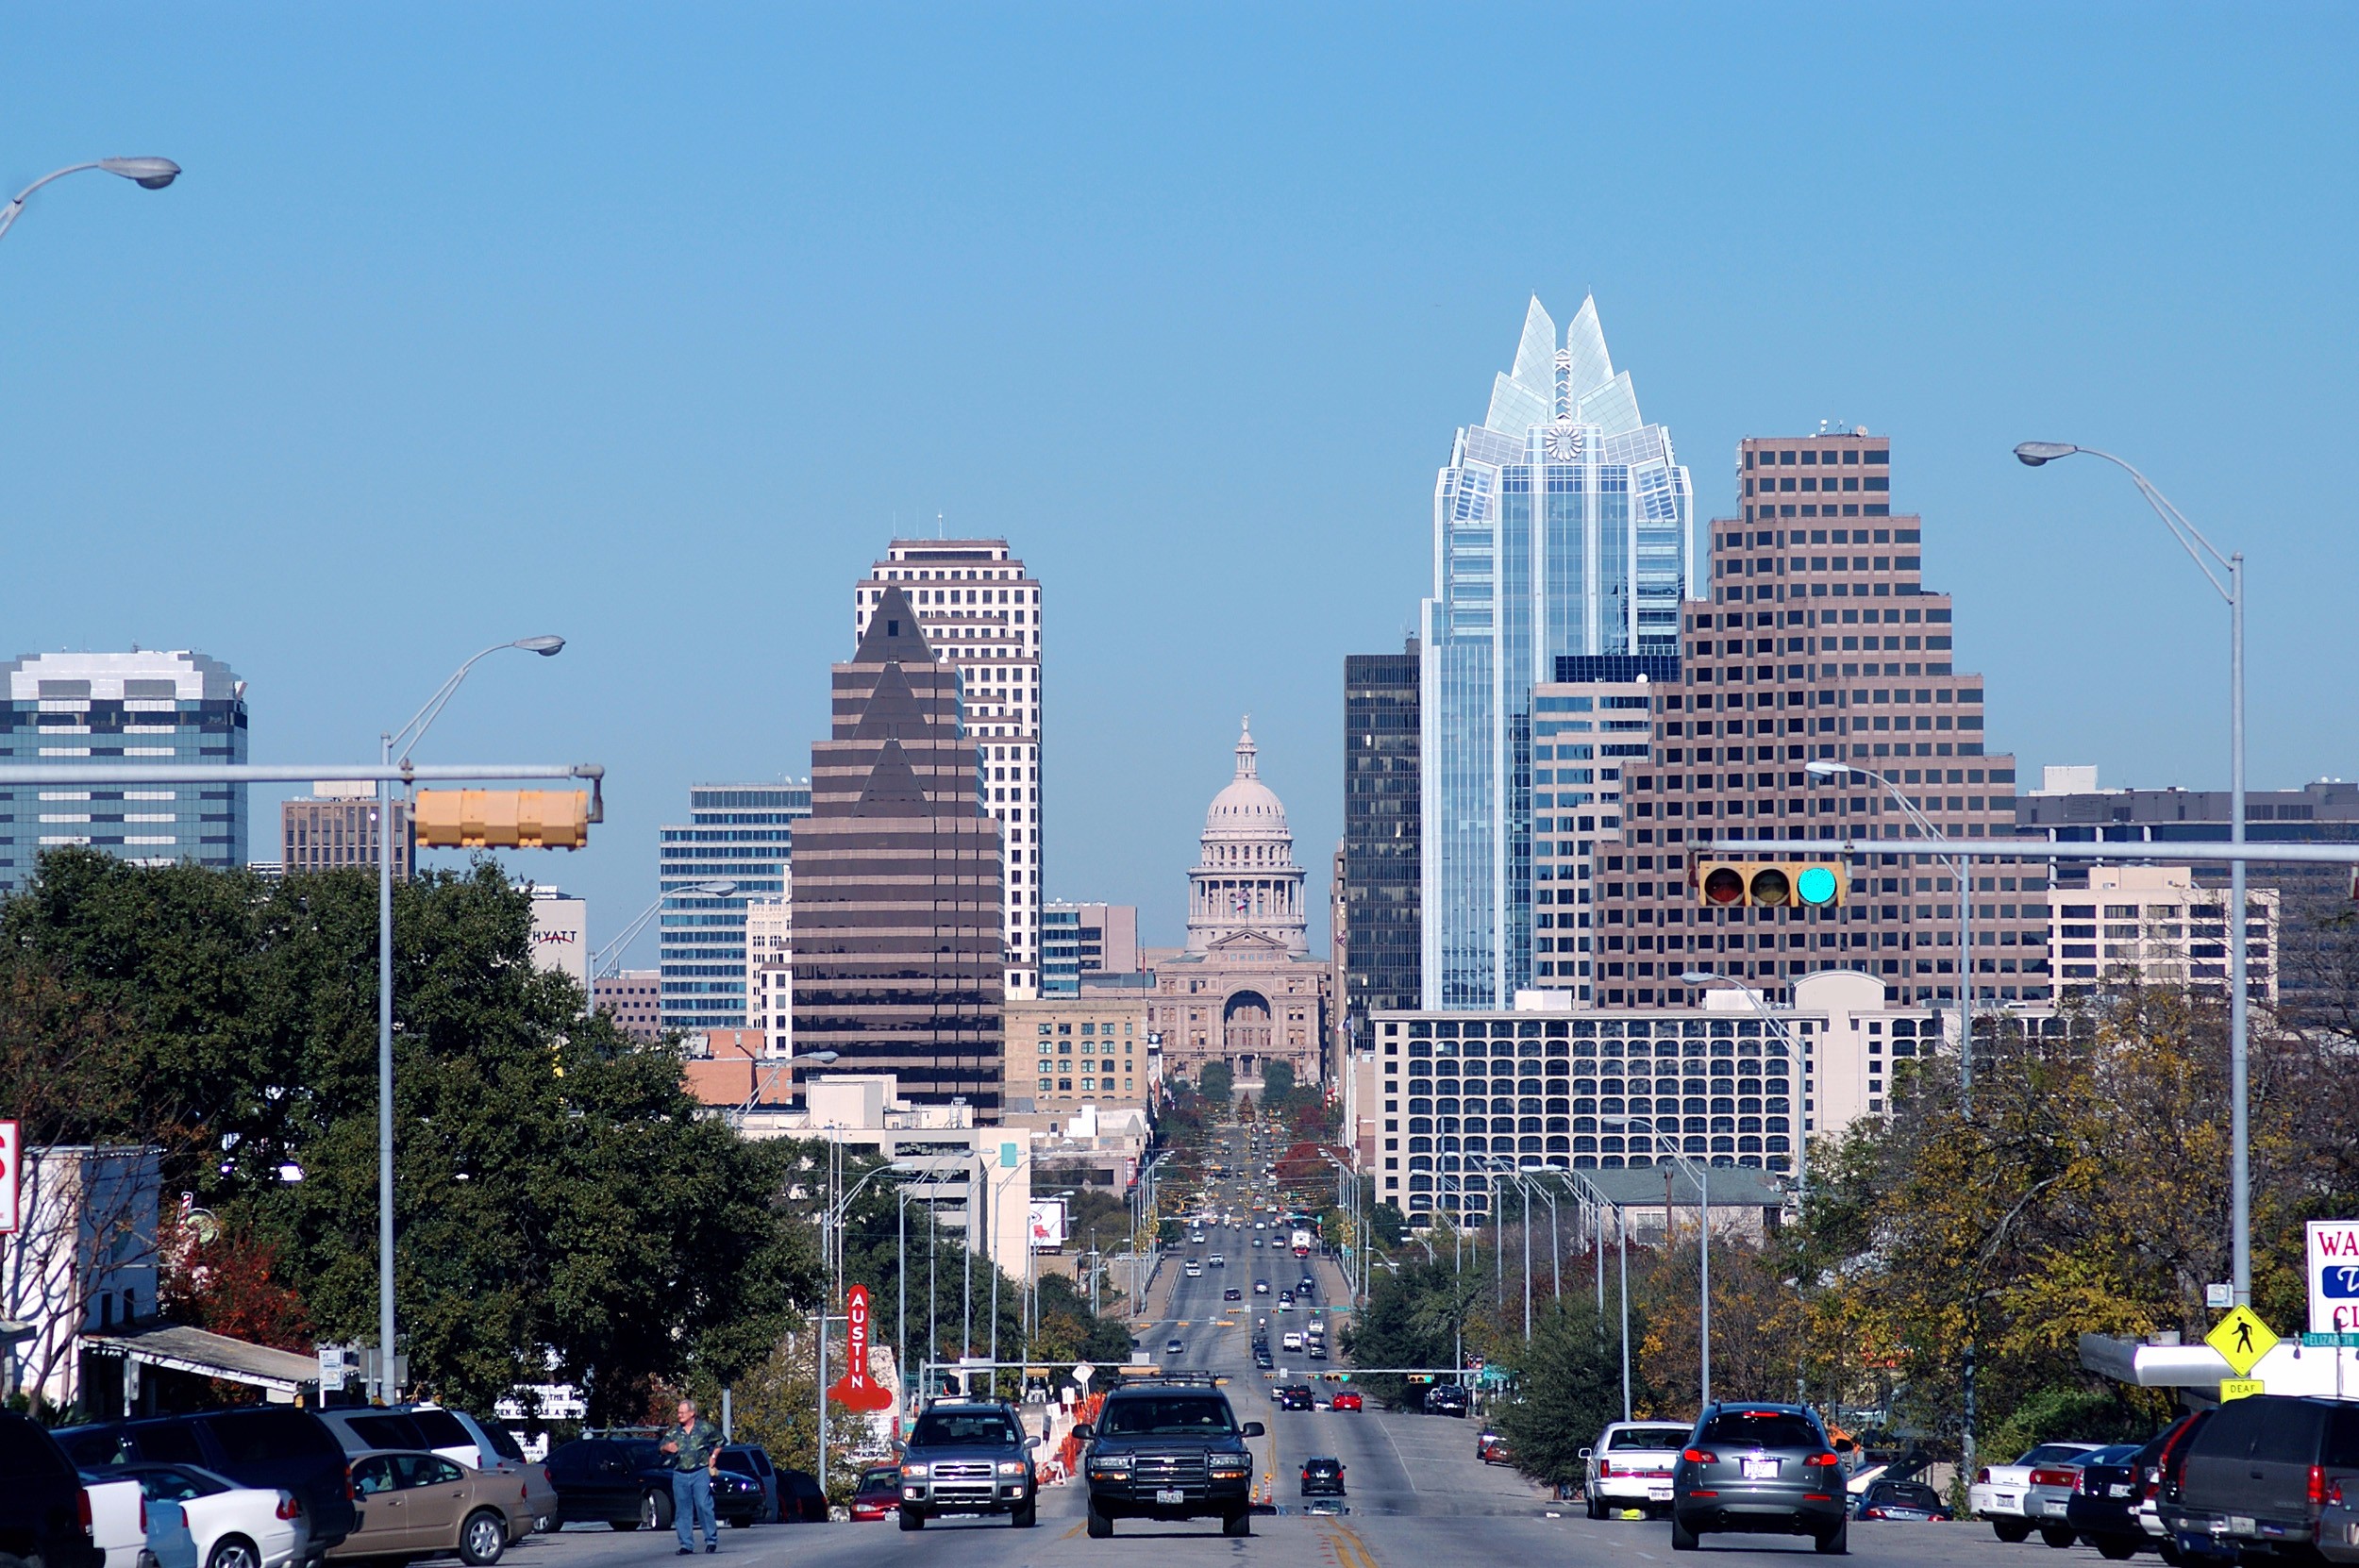 Downtown Austin Texas as seen from South Congress